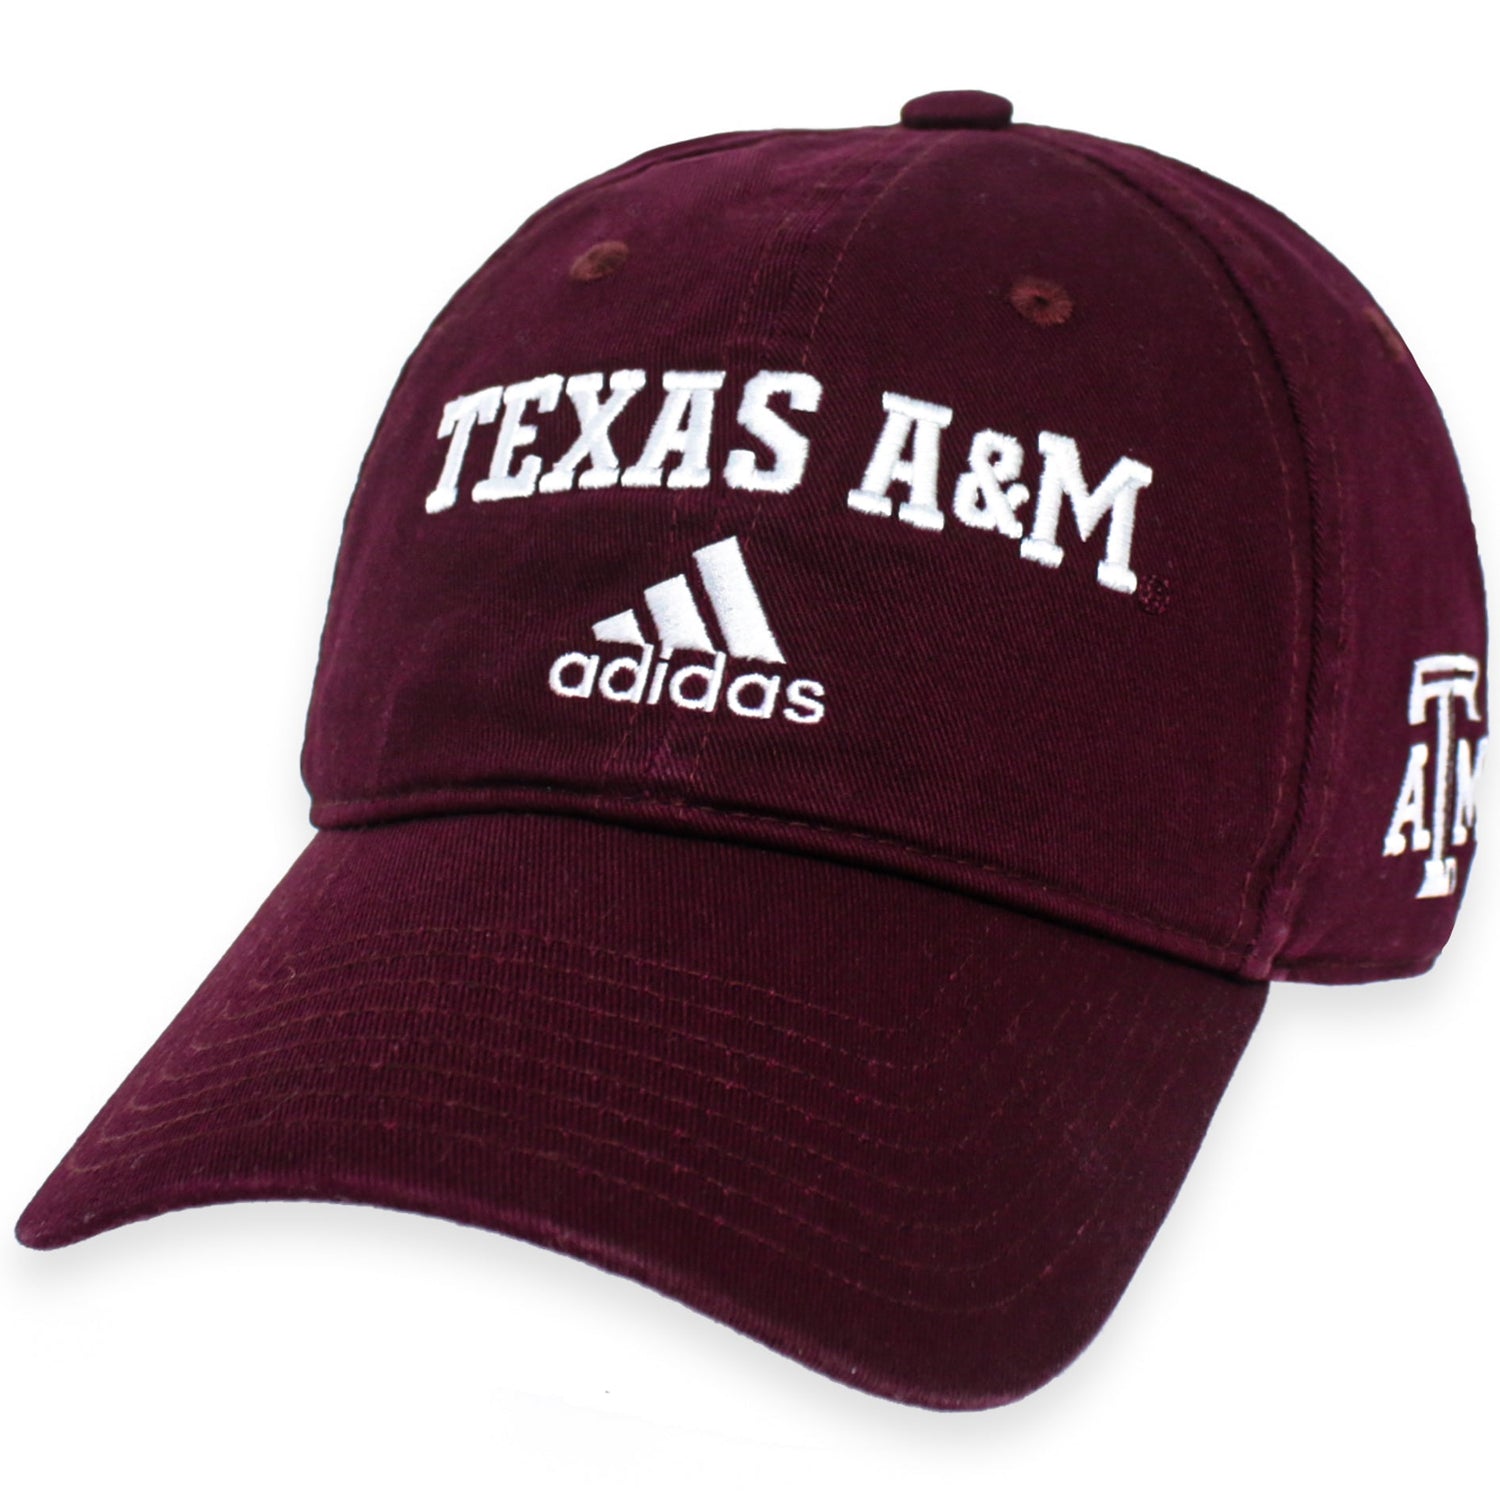 Texas A&M Adidas Wordmark Cotton Slouch Cap